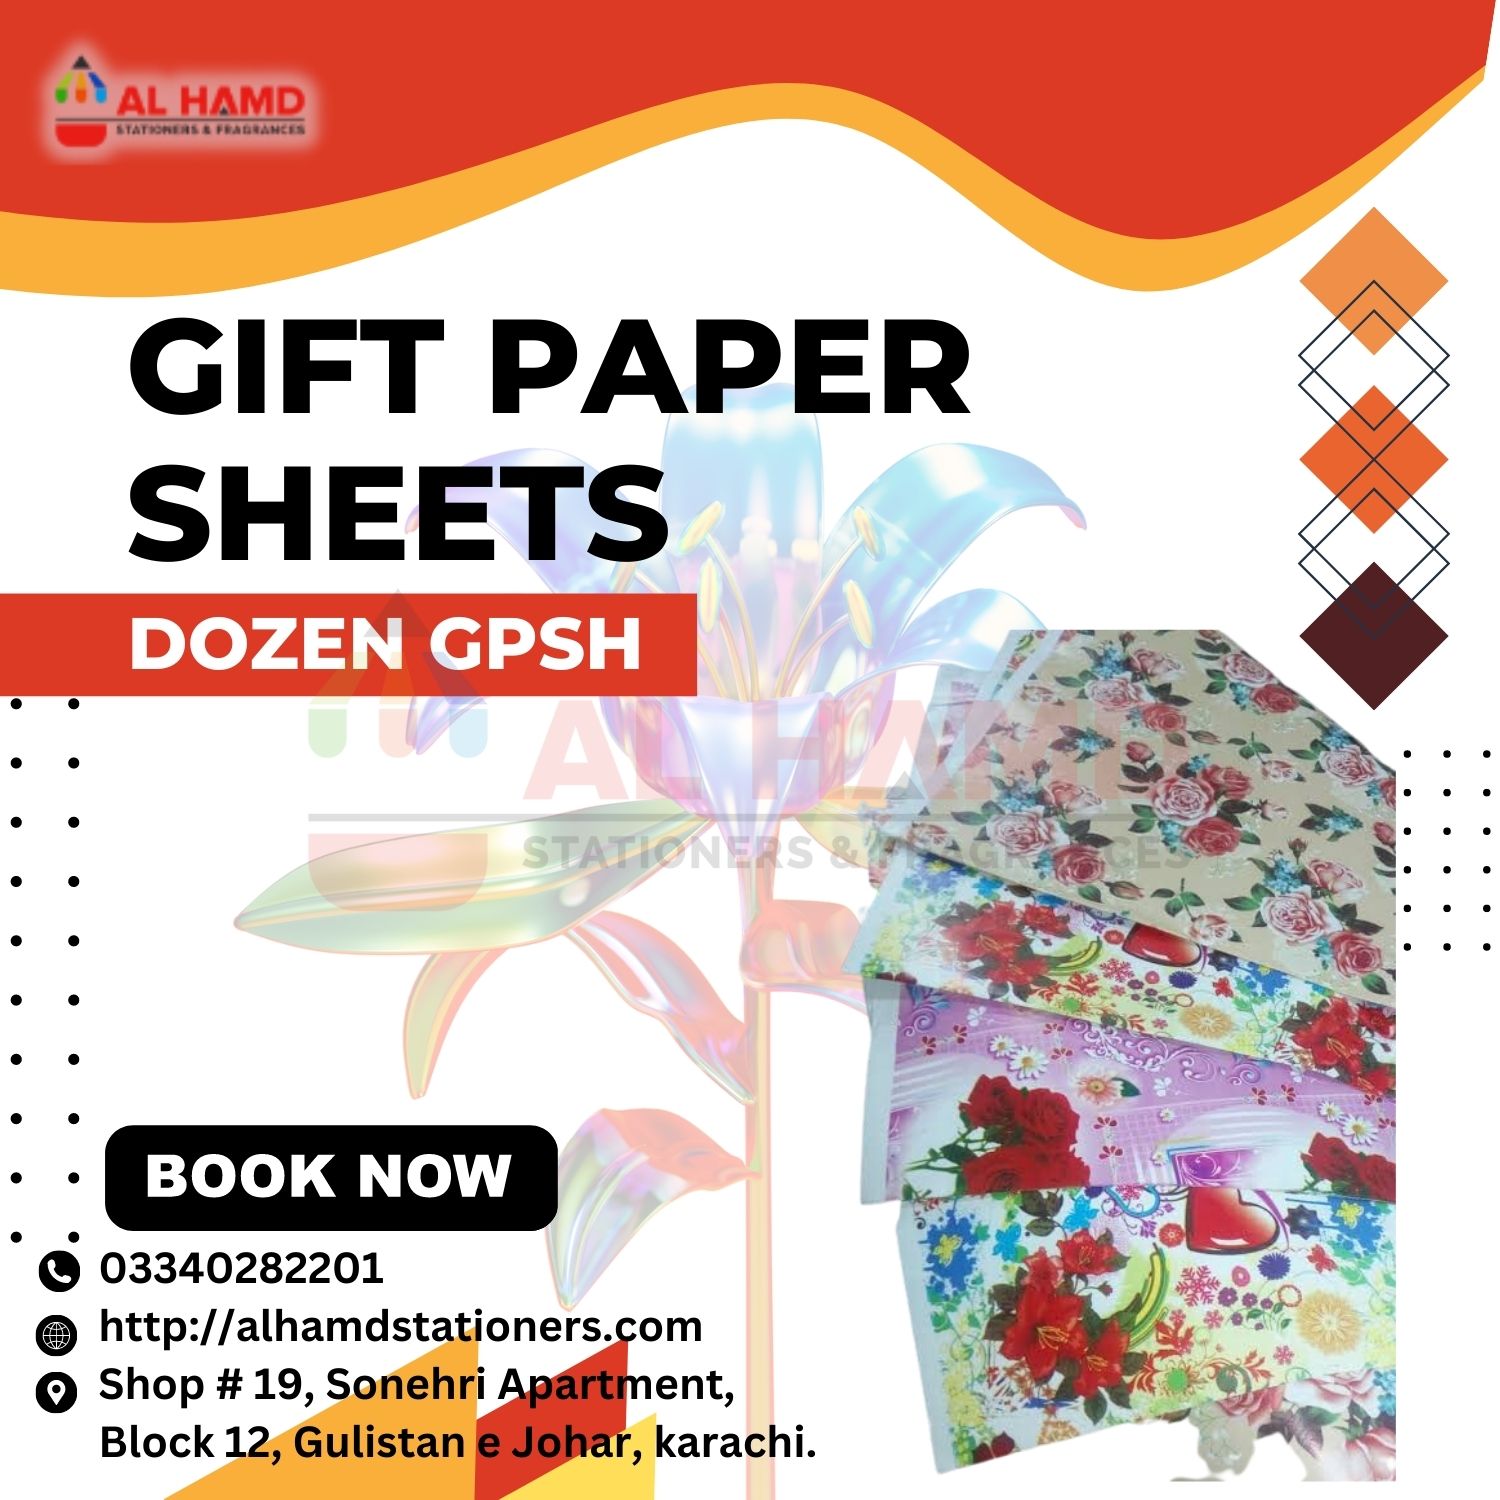 Gift Paper Sheets Dozen GPSh